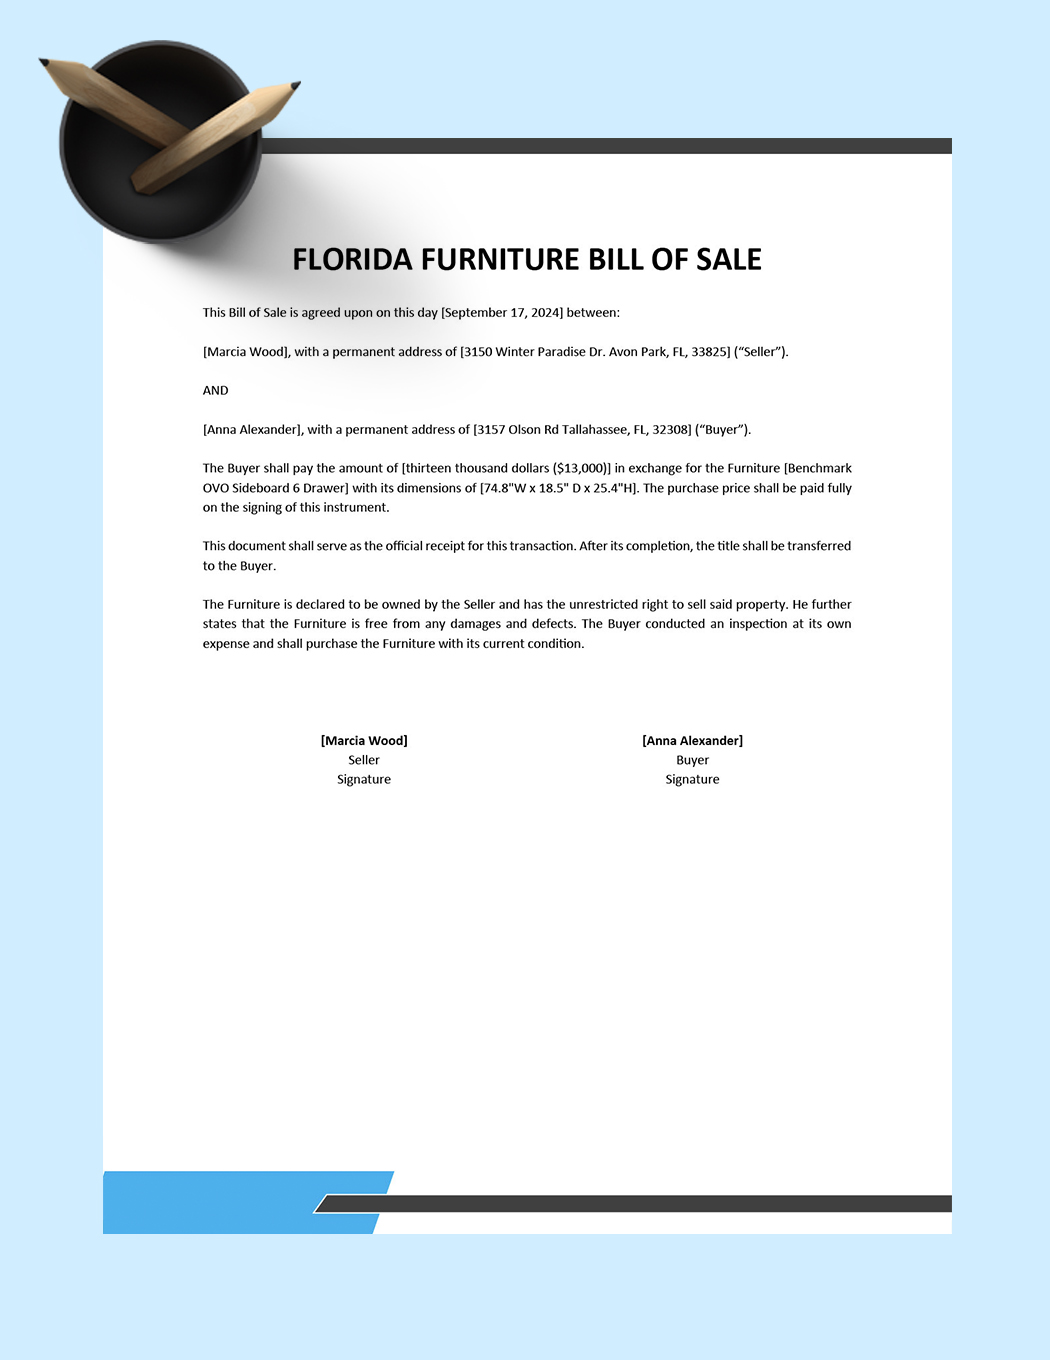 Florida Furniture Bill of Sale Template